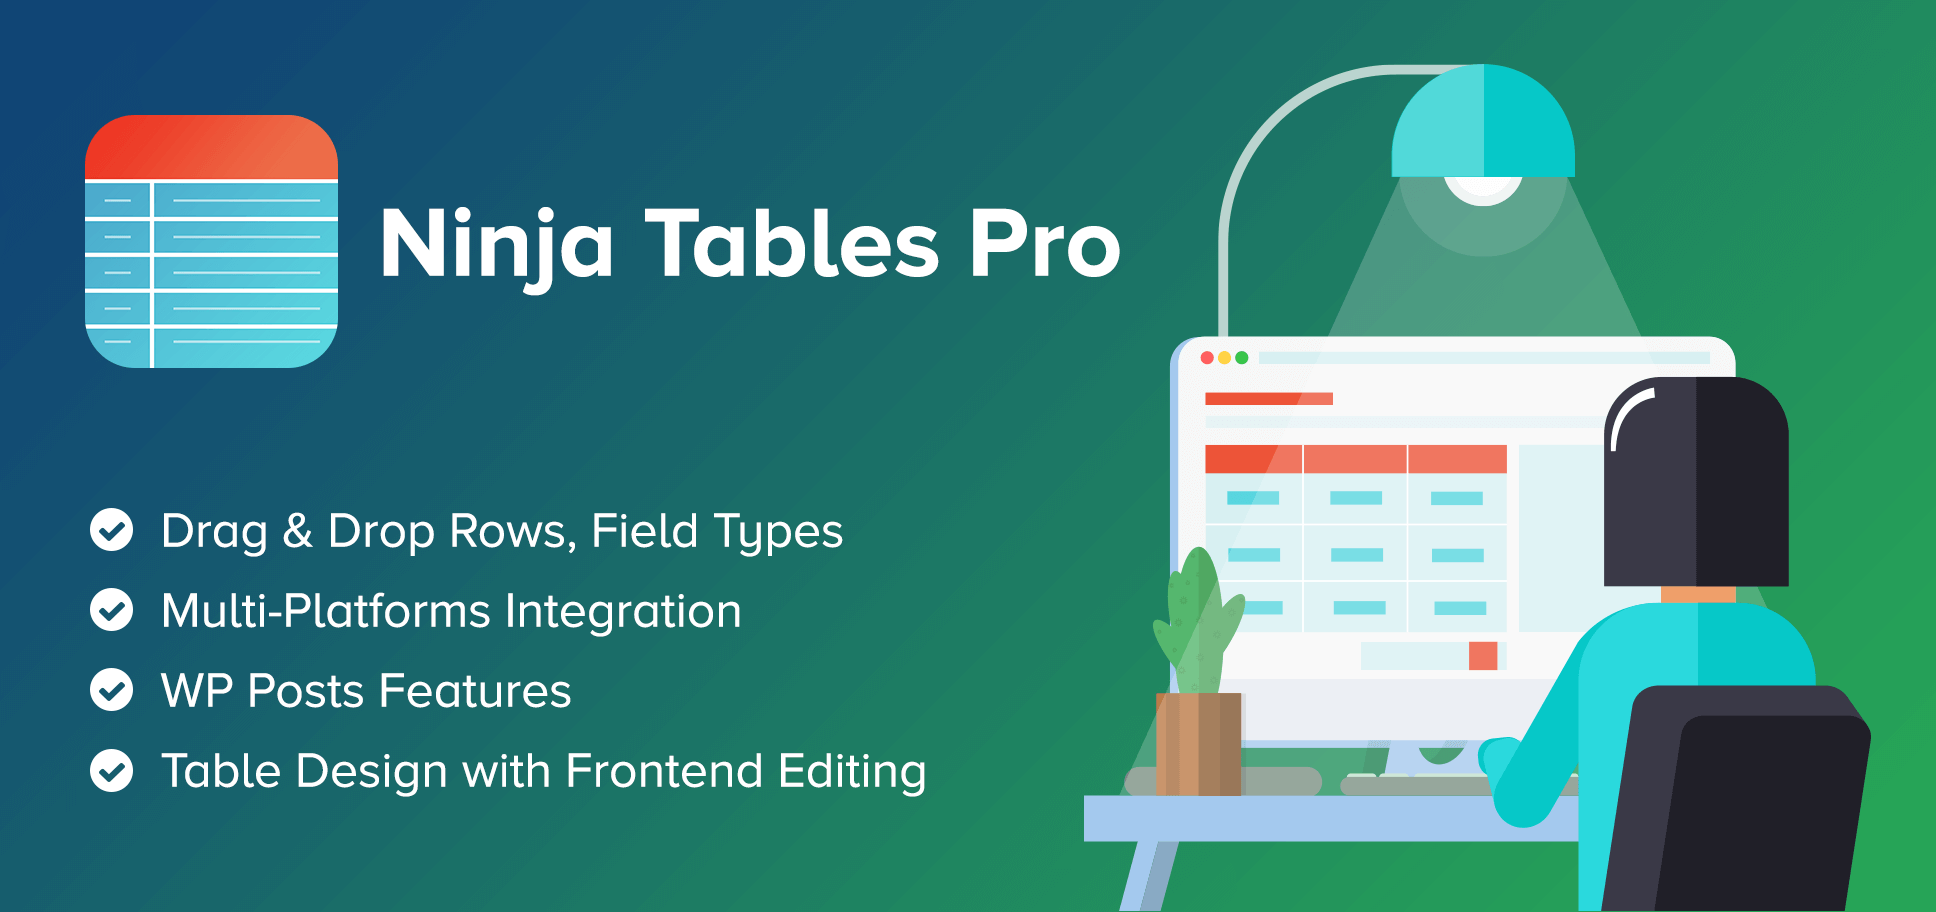 Ninja Tables Pro v4.3.4 Free